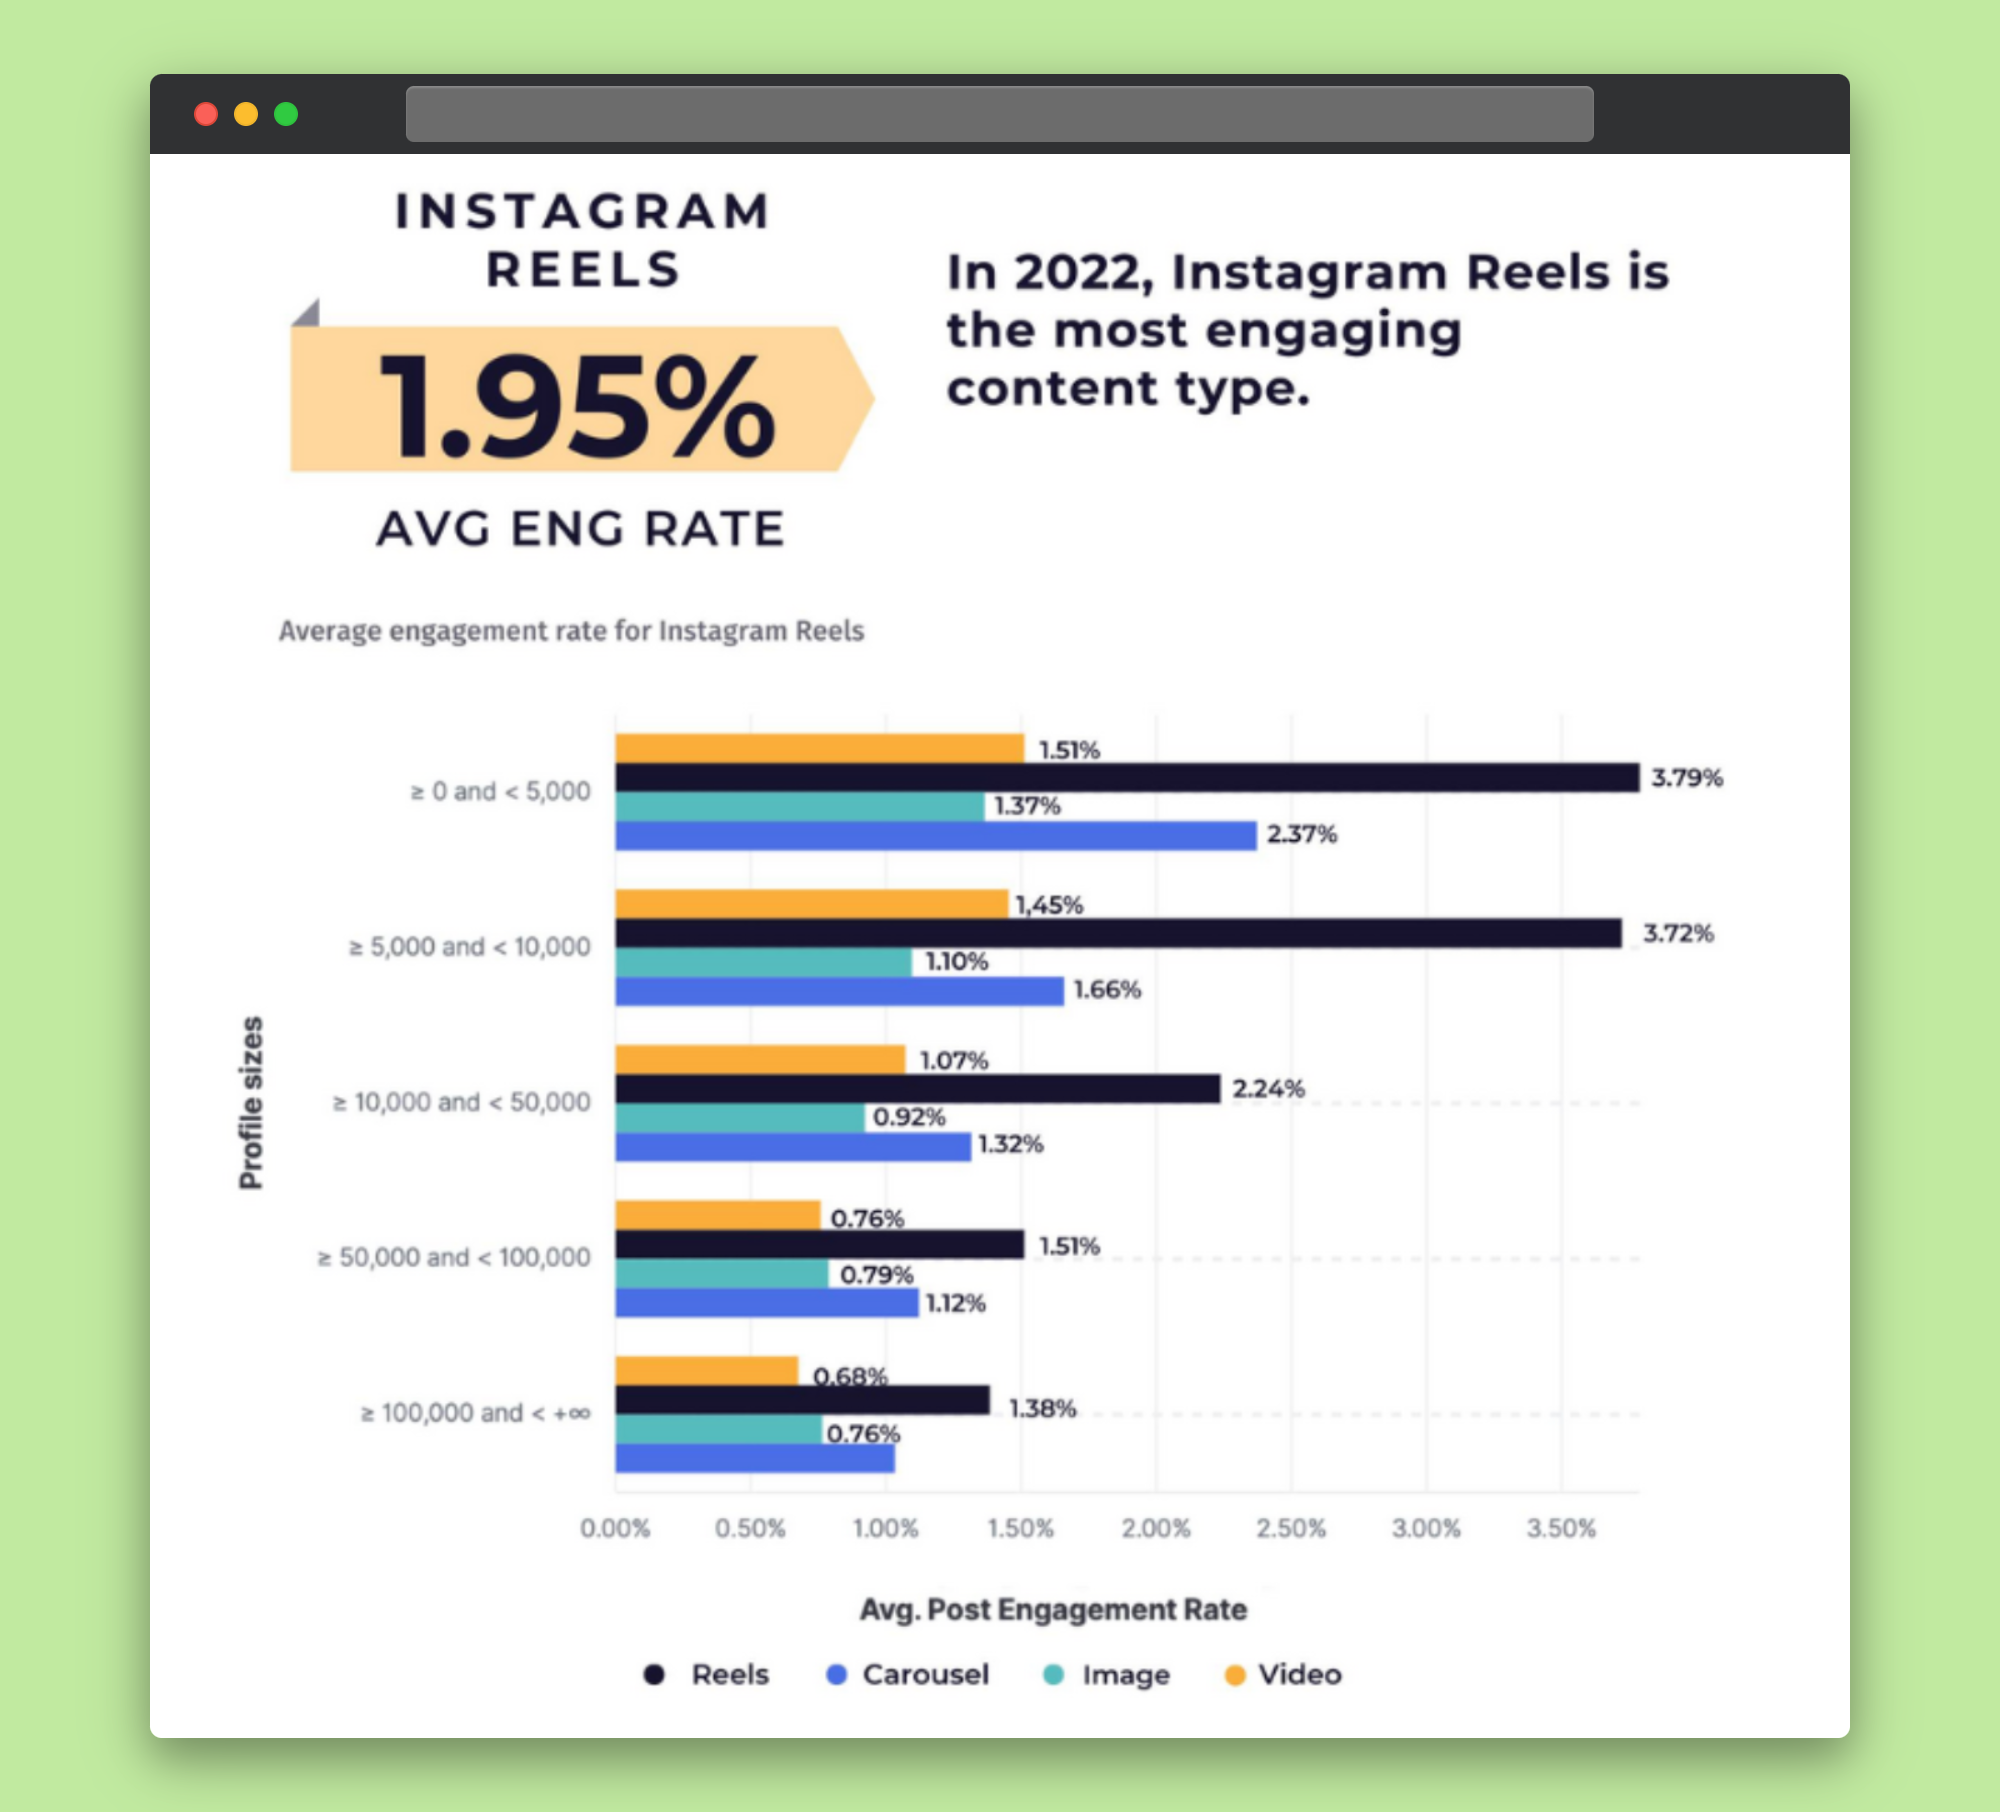 Alt text: Instagram reels have 1.95% average engagement rate